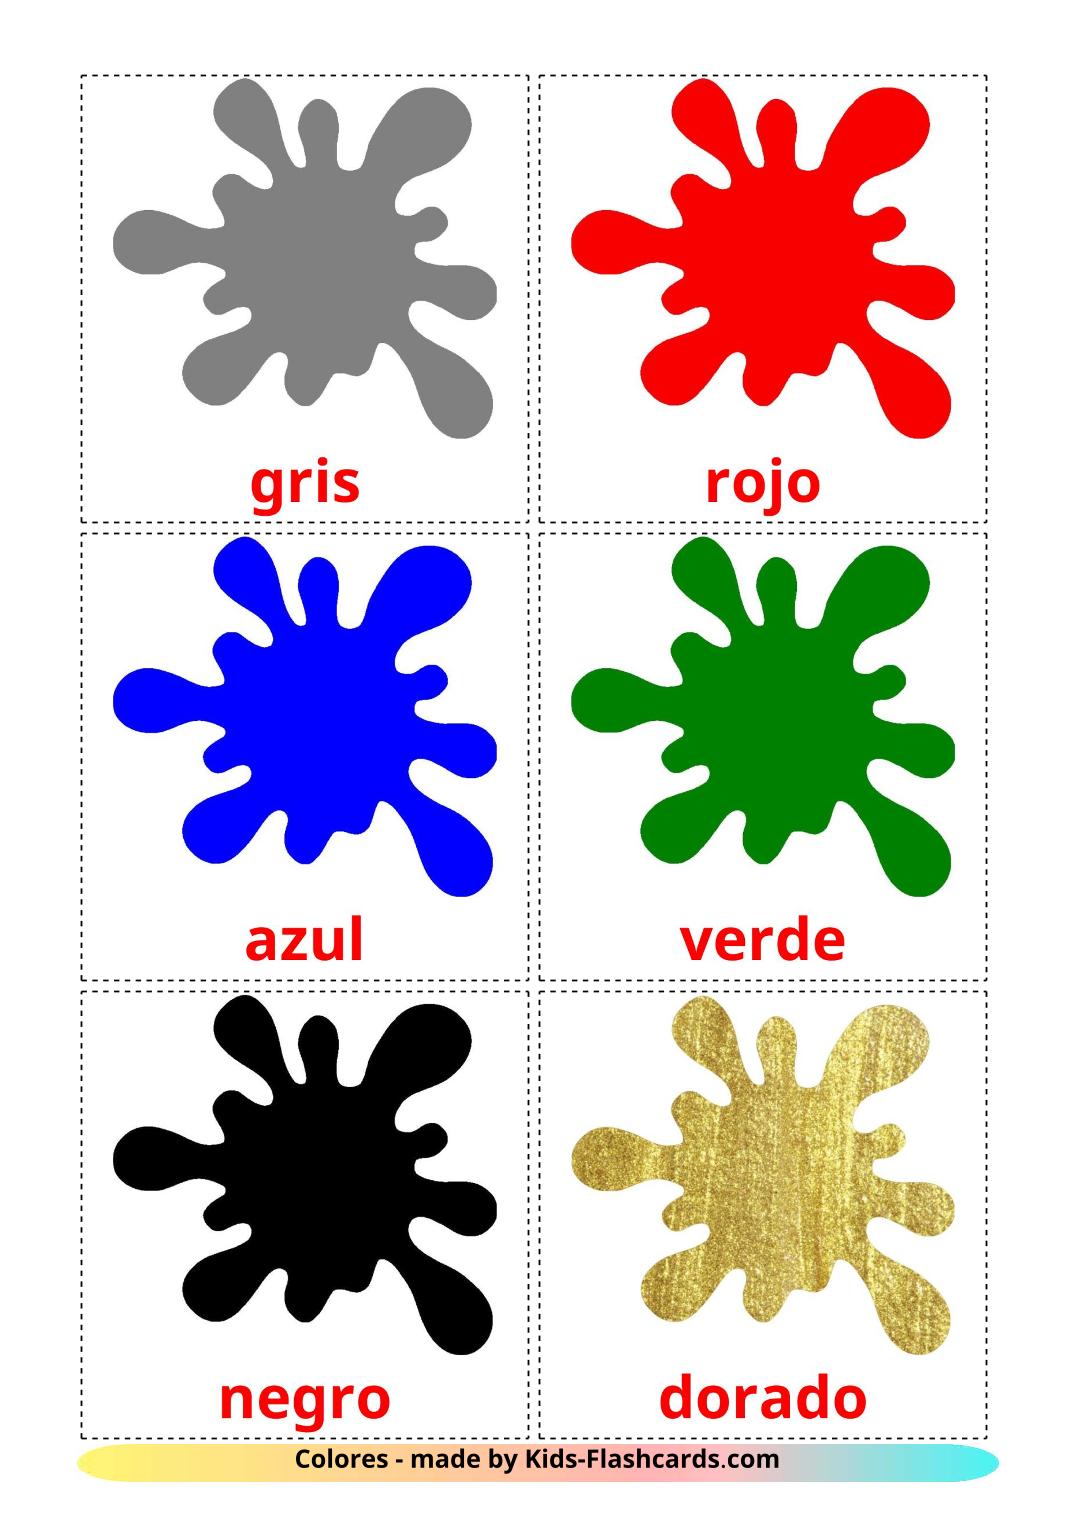 Colores - 12 fichas de español para imprimir gratis 